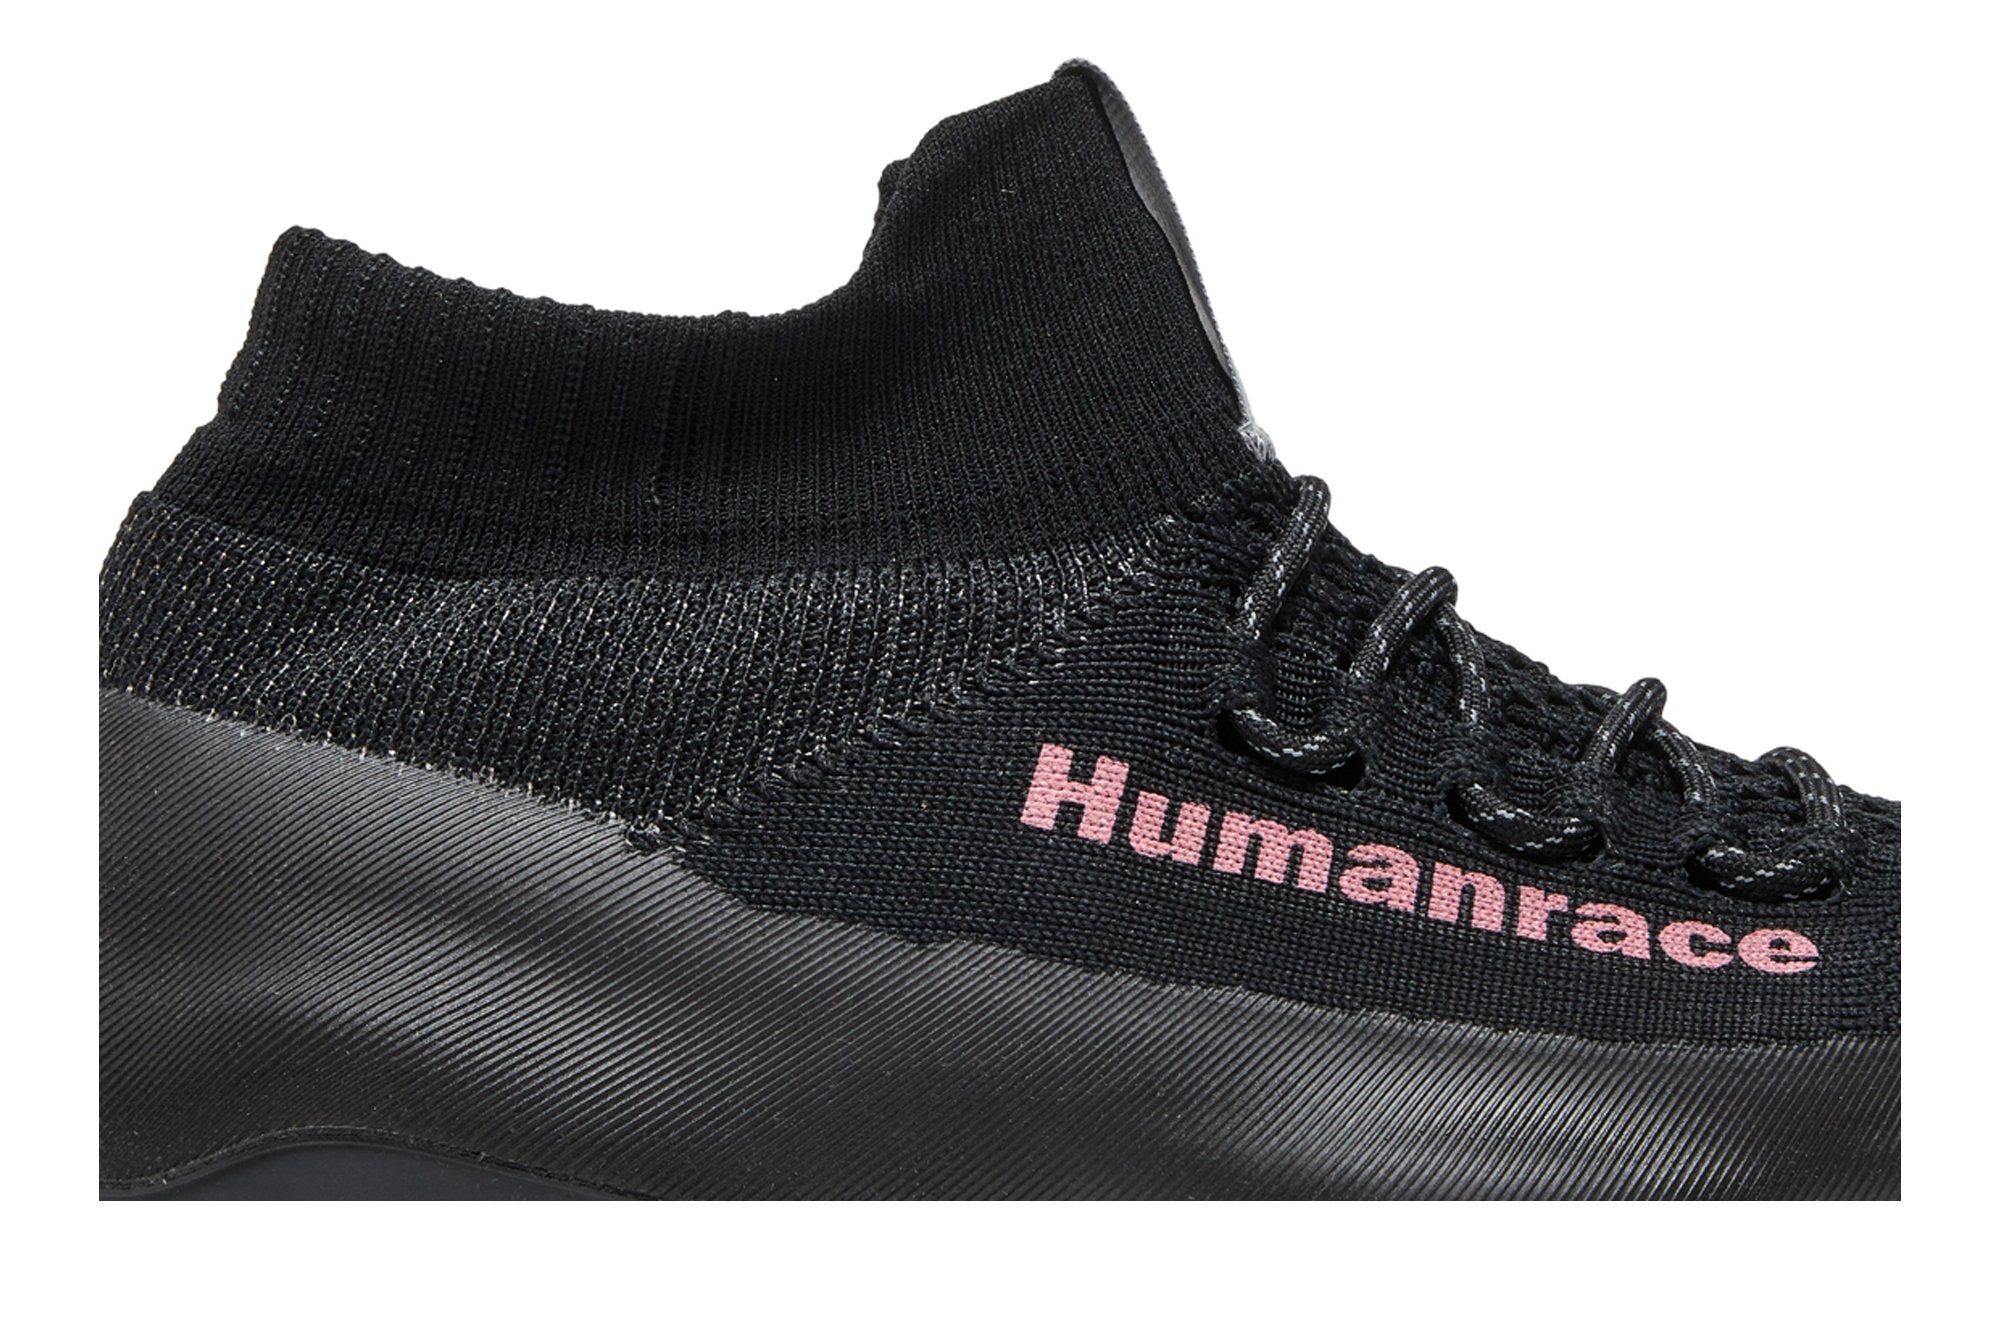 Adidas Humanrace Sičhona - Black Pink ()